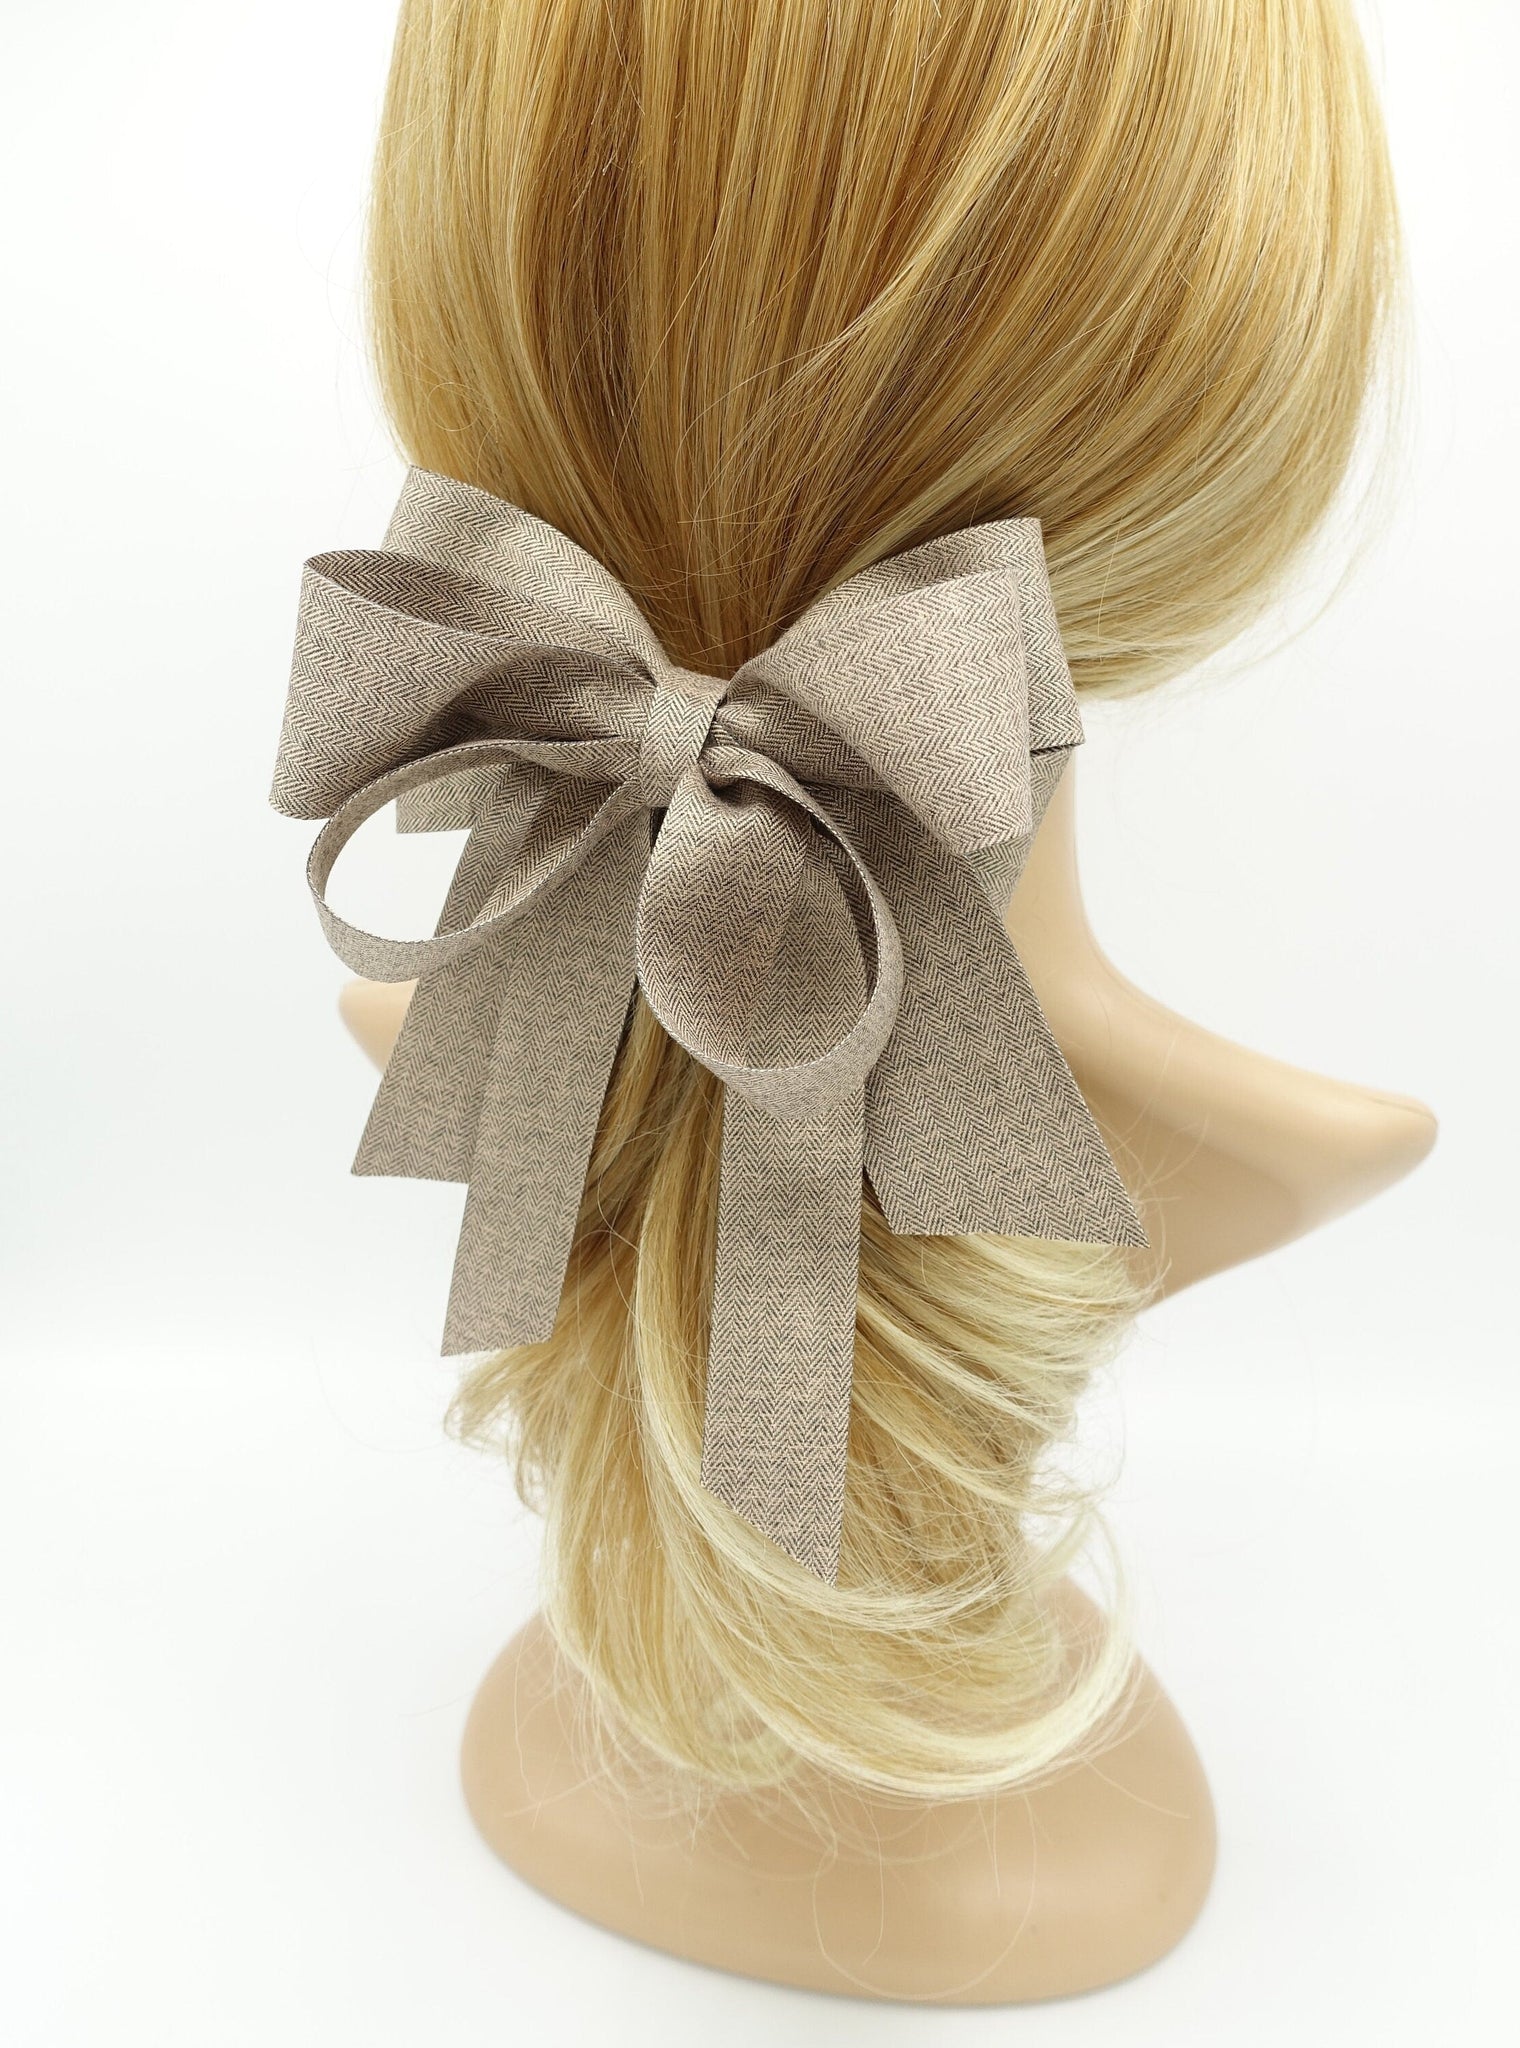 veryshine.com Barrette (Bow) Beige herringbone multi wing hair bow hair accessory for women